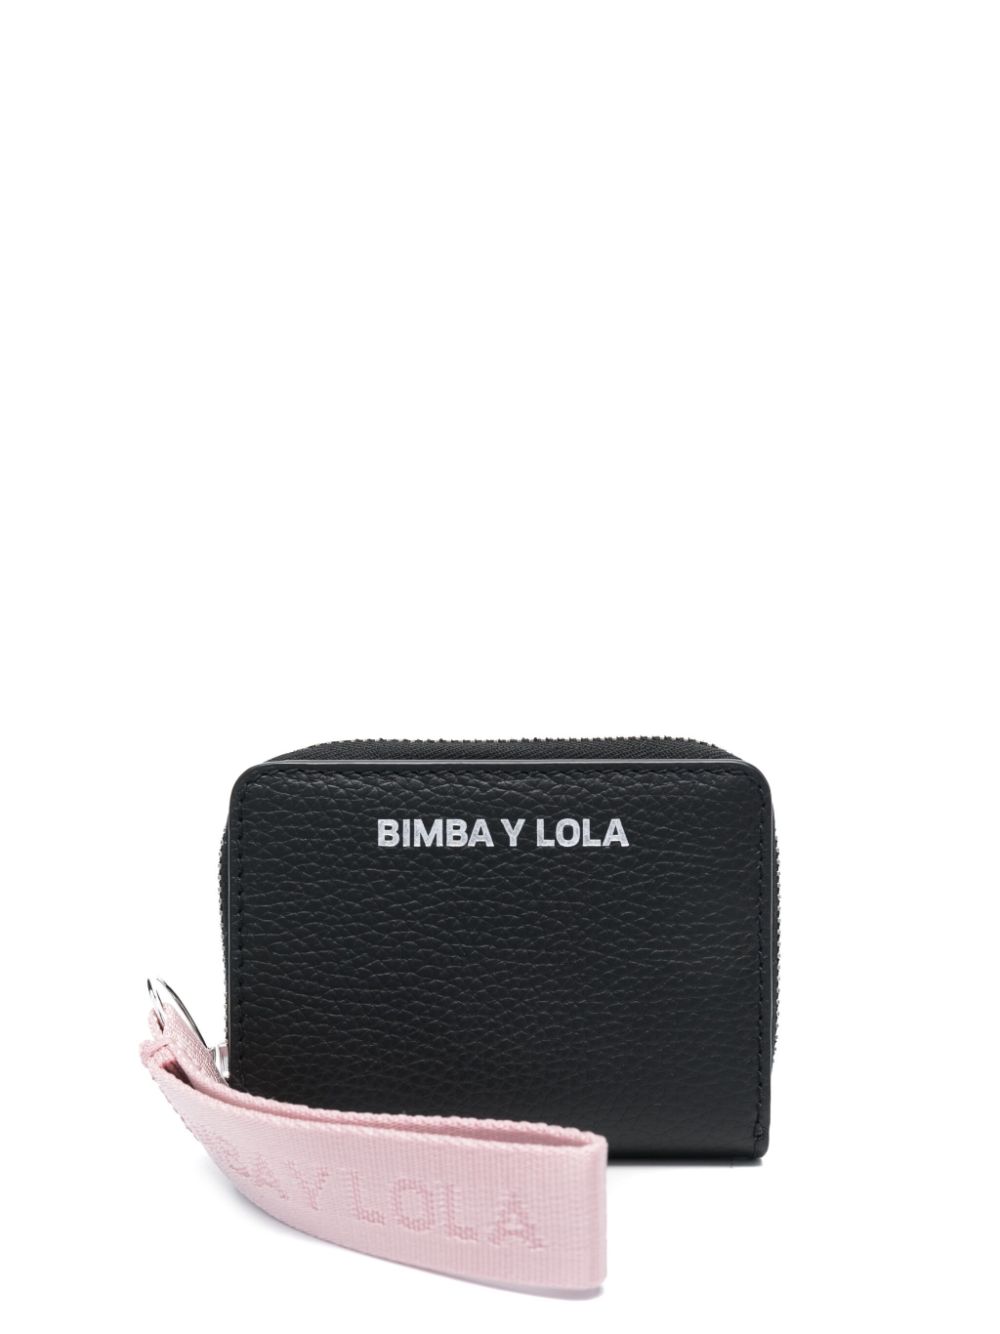 Bimba y Lola logo-strap Coin Purse - Farfetch